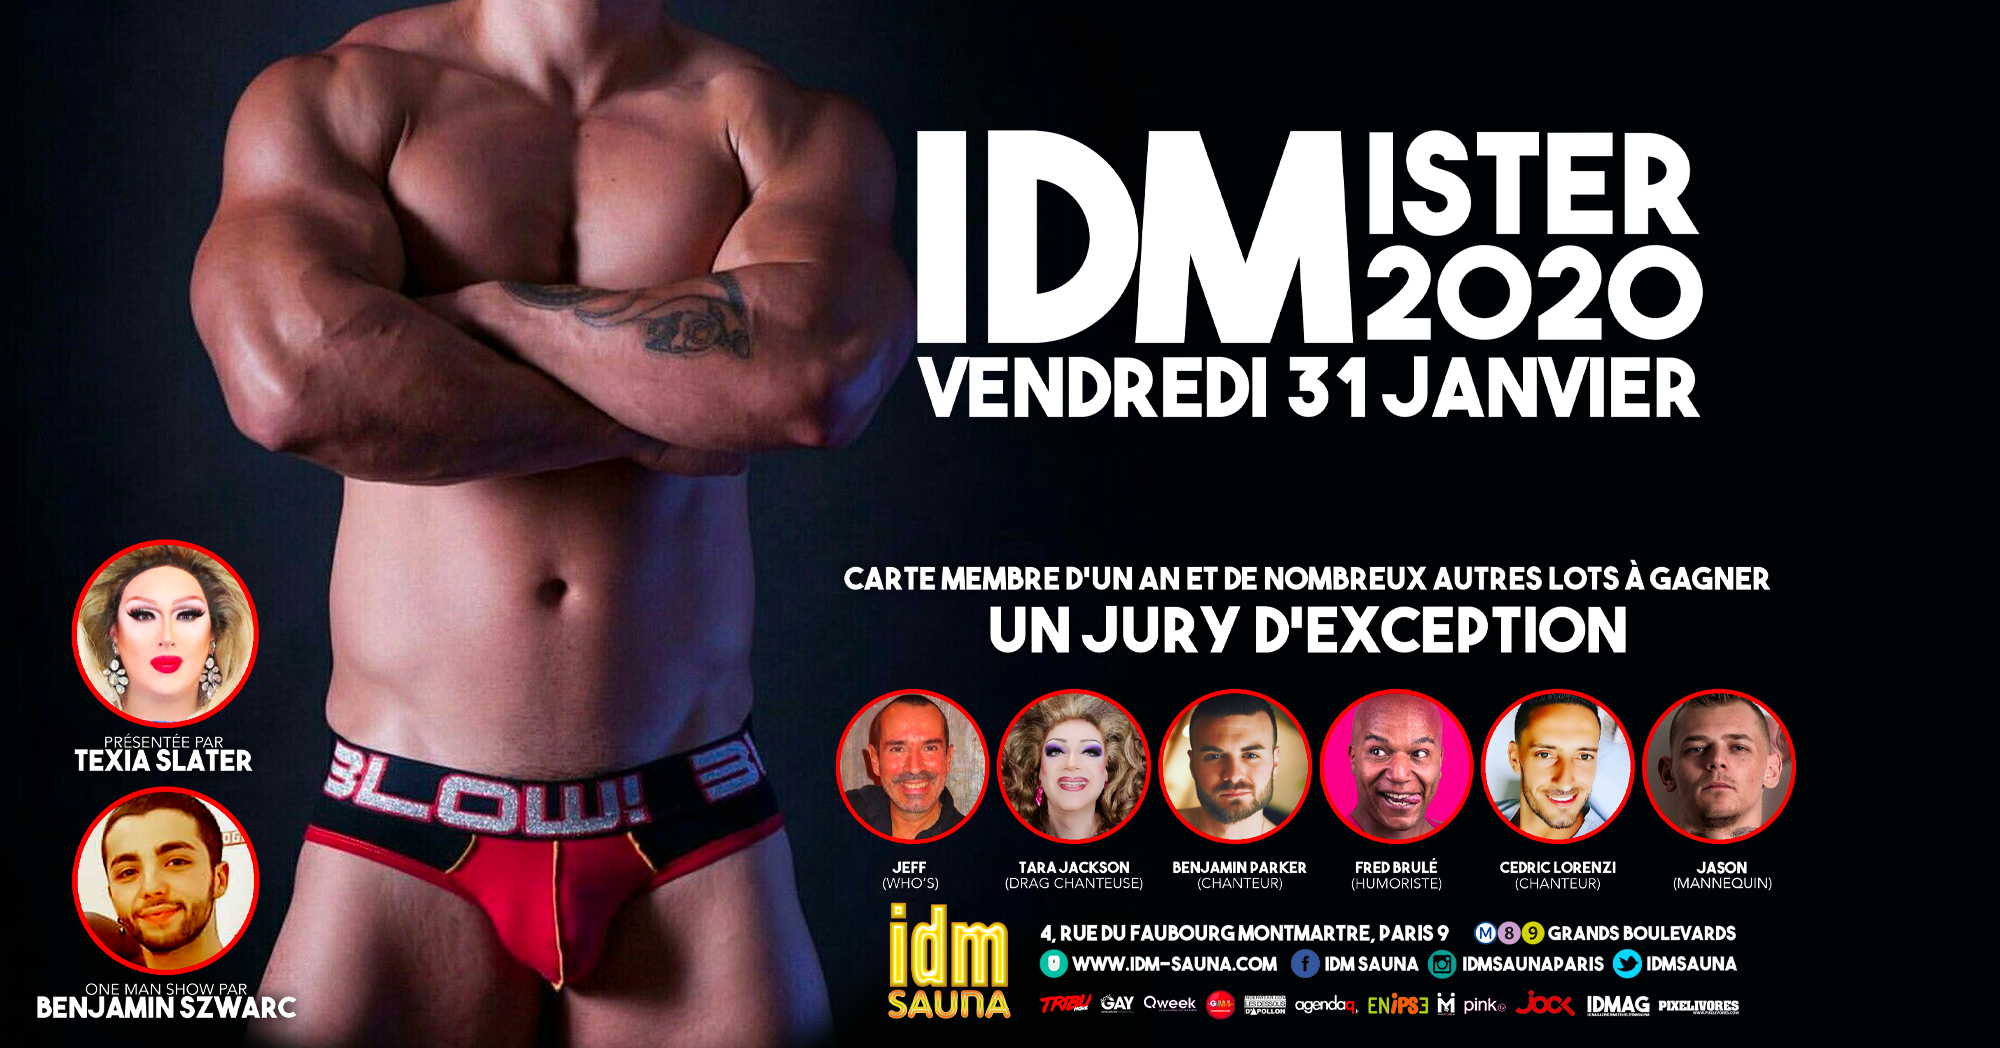 "IDMister" Vendredi 31 janvier au sauna IDM